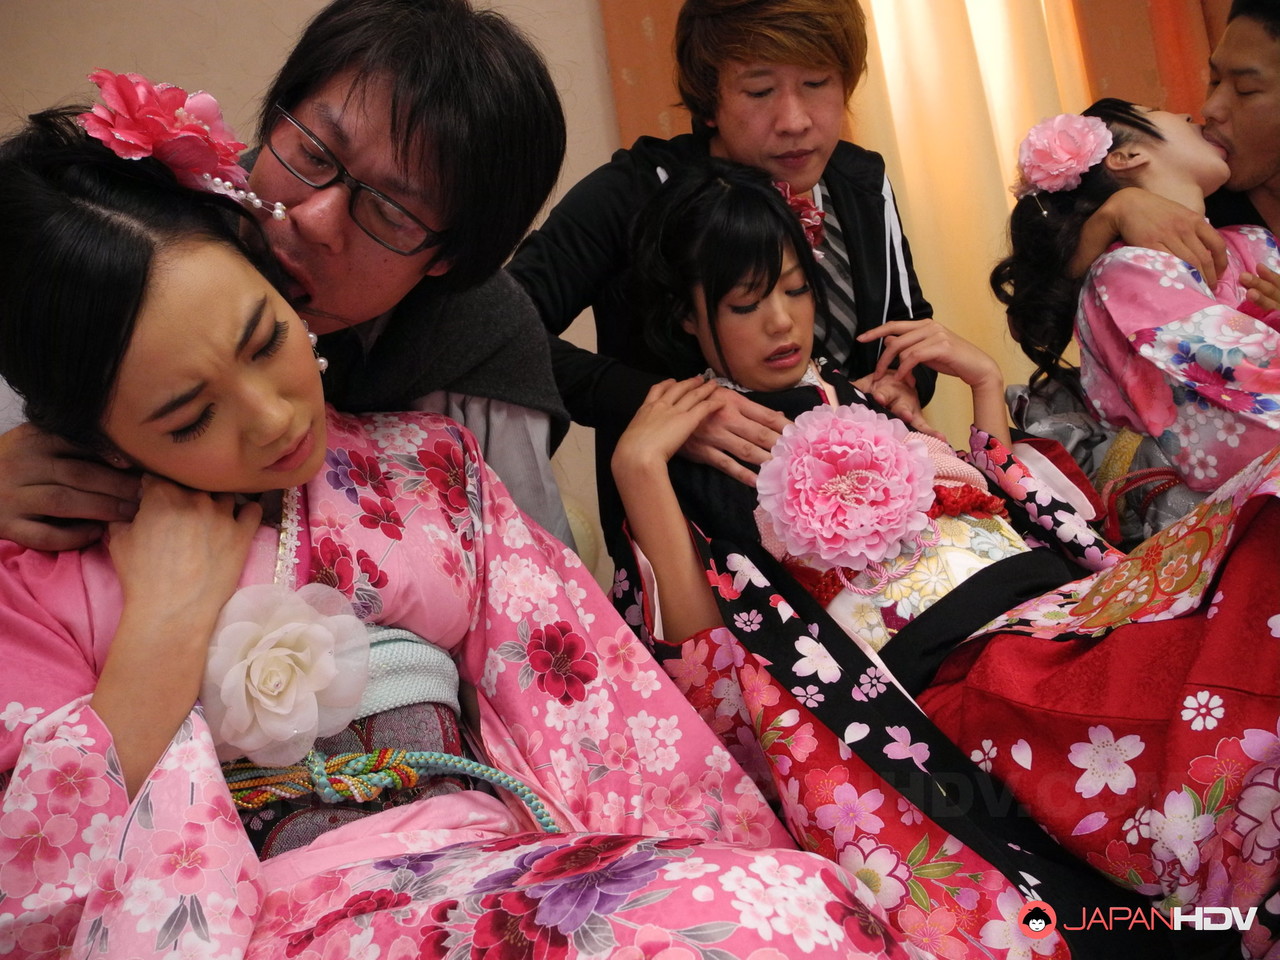 Black haired Asian babe Hina enjoys a group bang with her friends 色情照片 #425297850 | Japan HDV Pics, Hina, Sanae Momoi, Uta Kohaku, Orgy, 手机色情